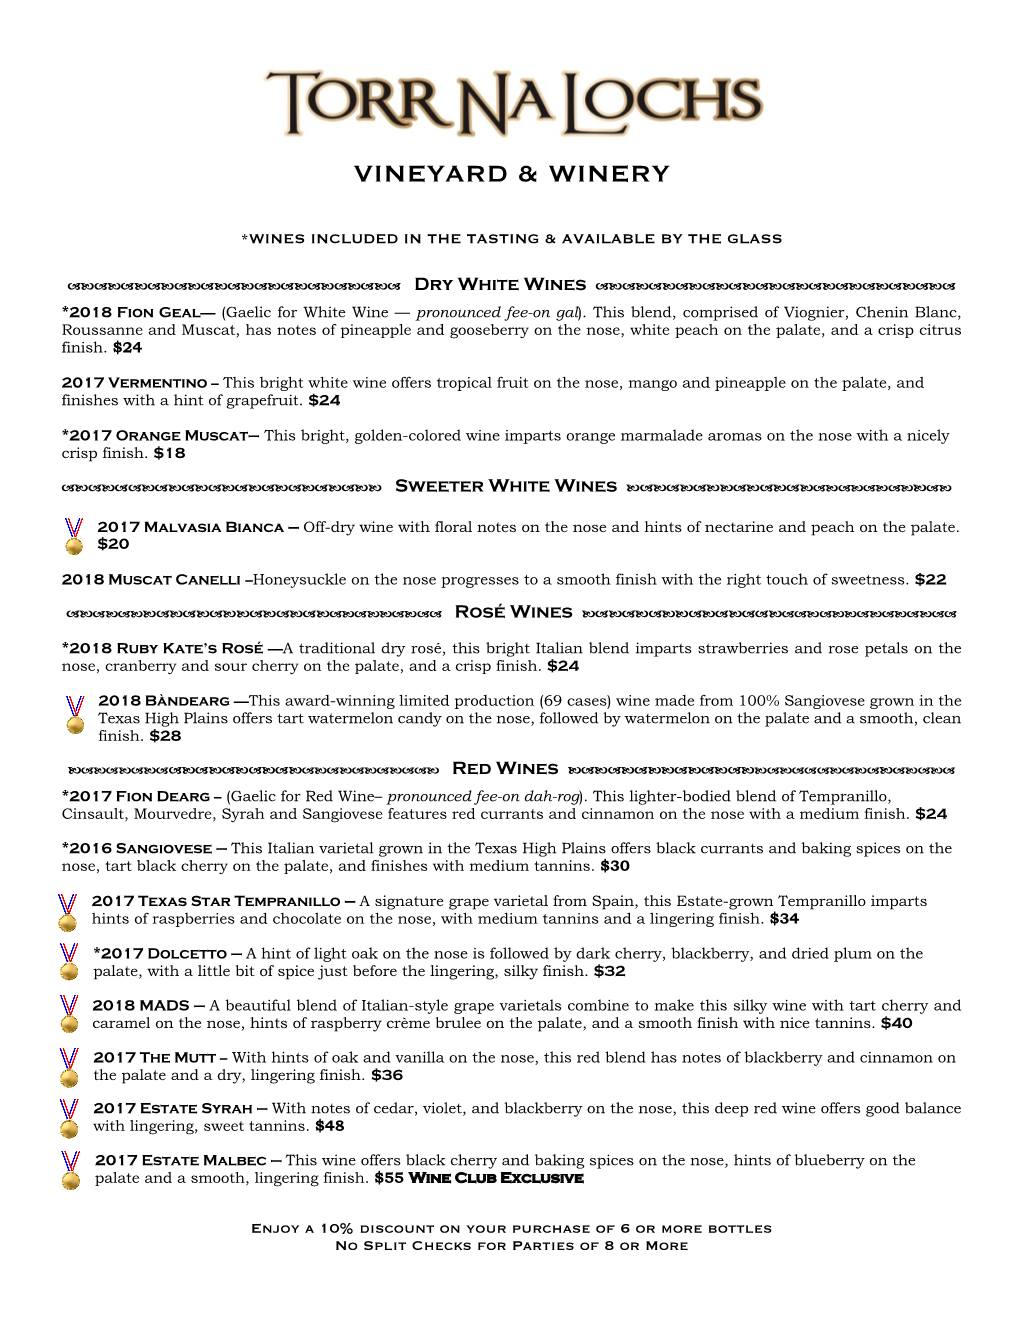 Vineyard & Winery